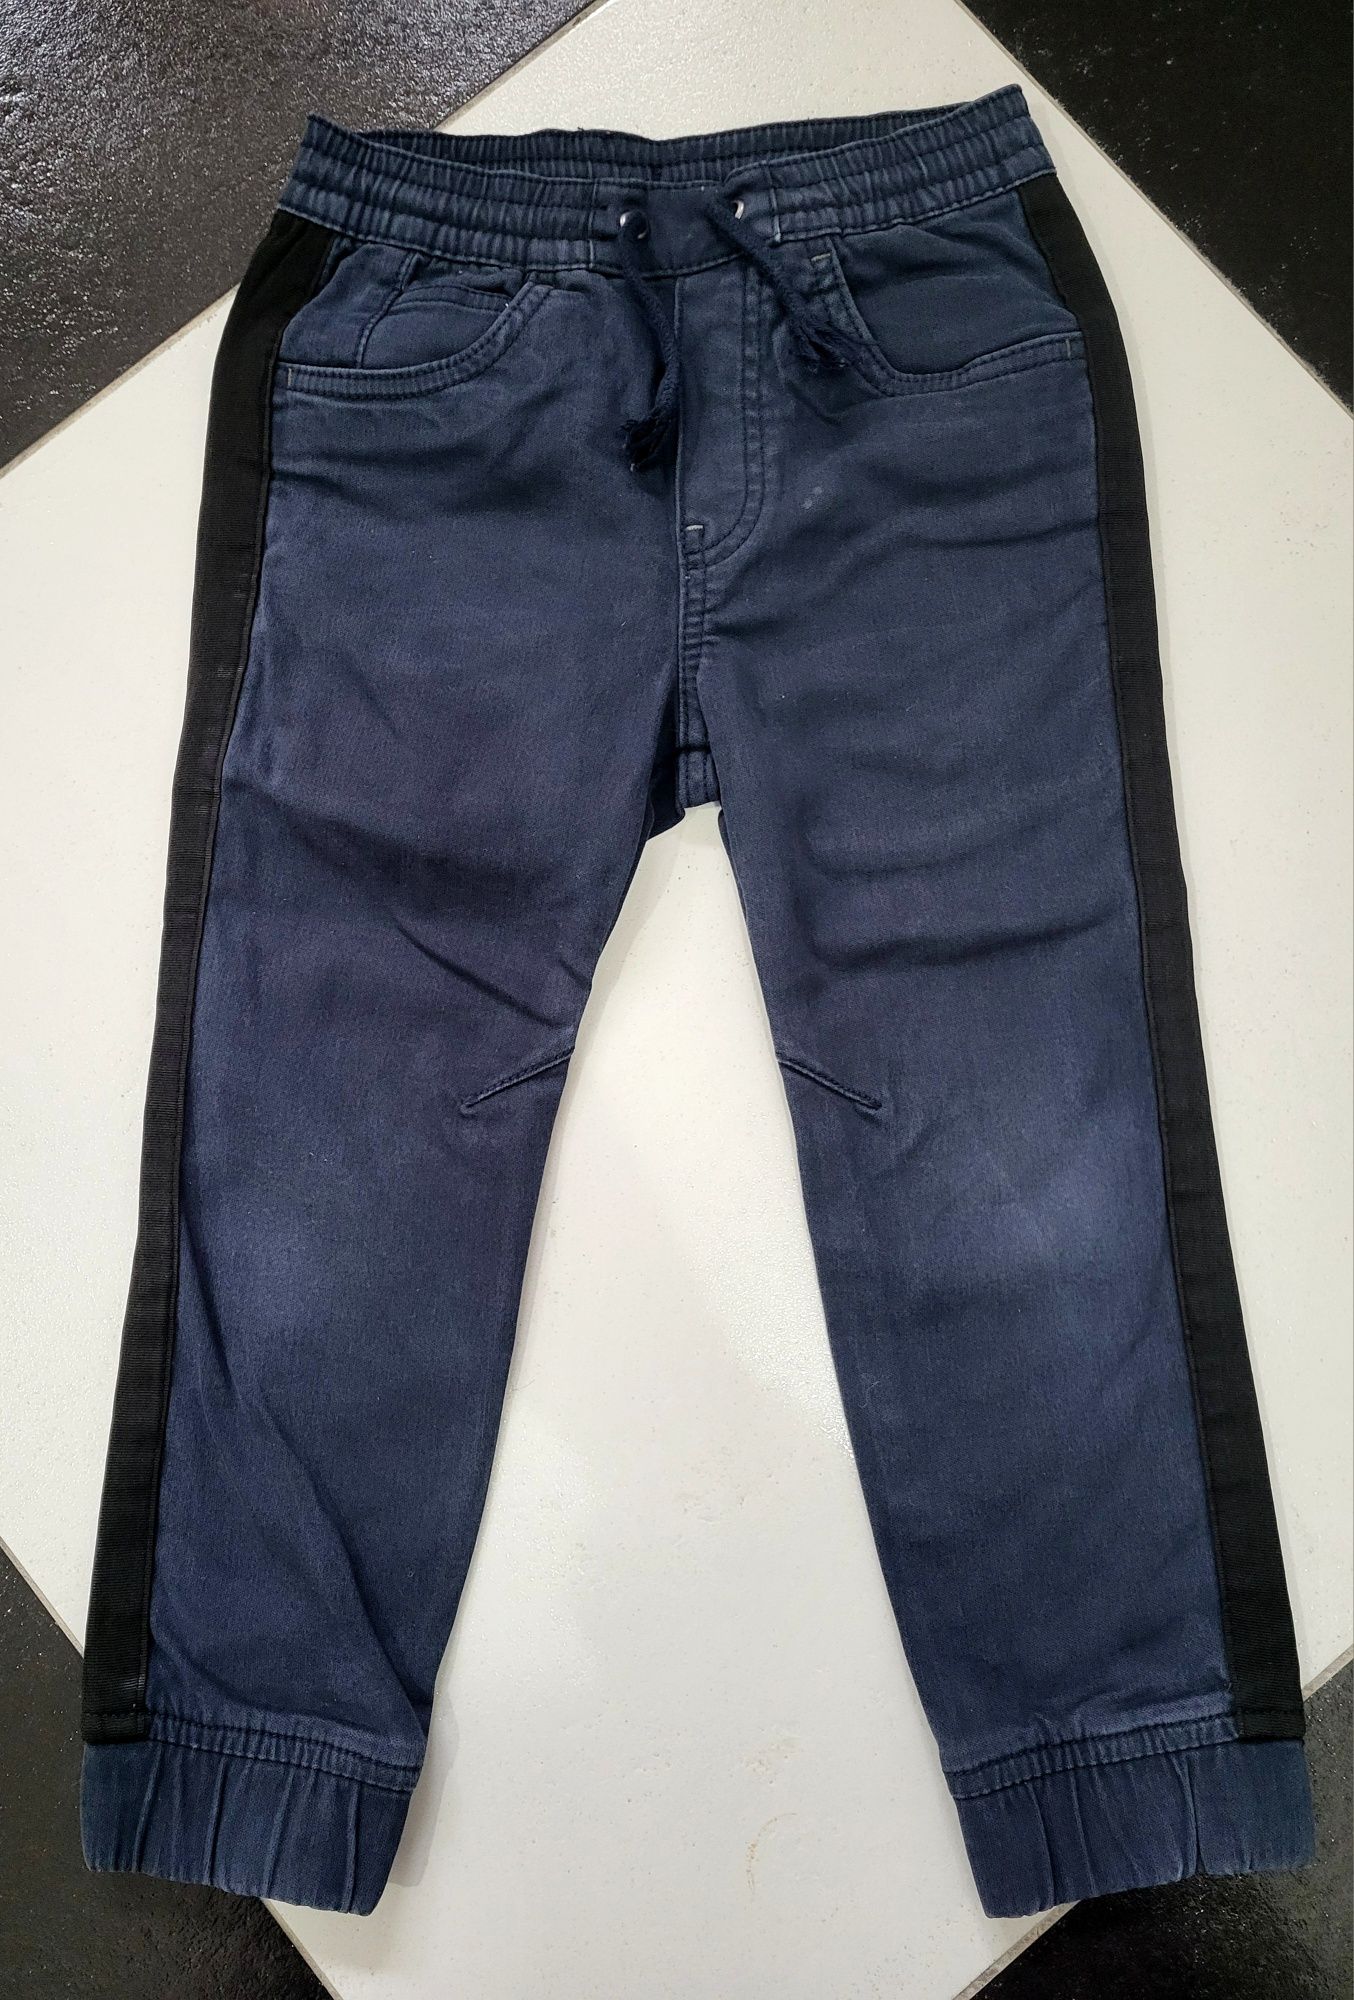 Spodnie jeansy granatowe z lampasem joggery eleganckie Zara r 110